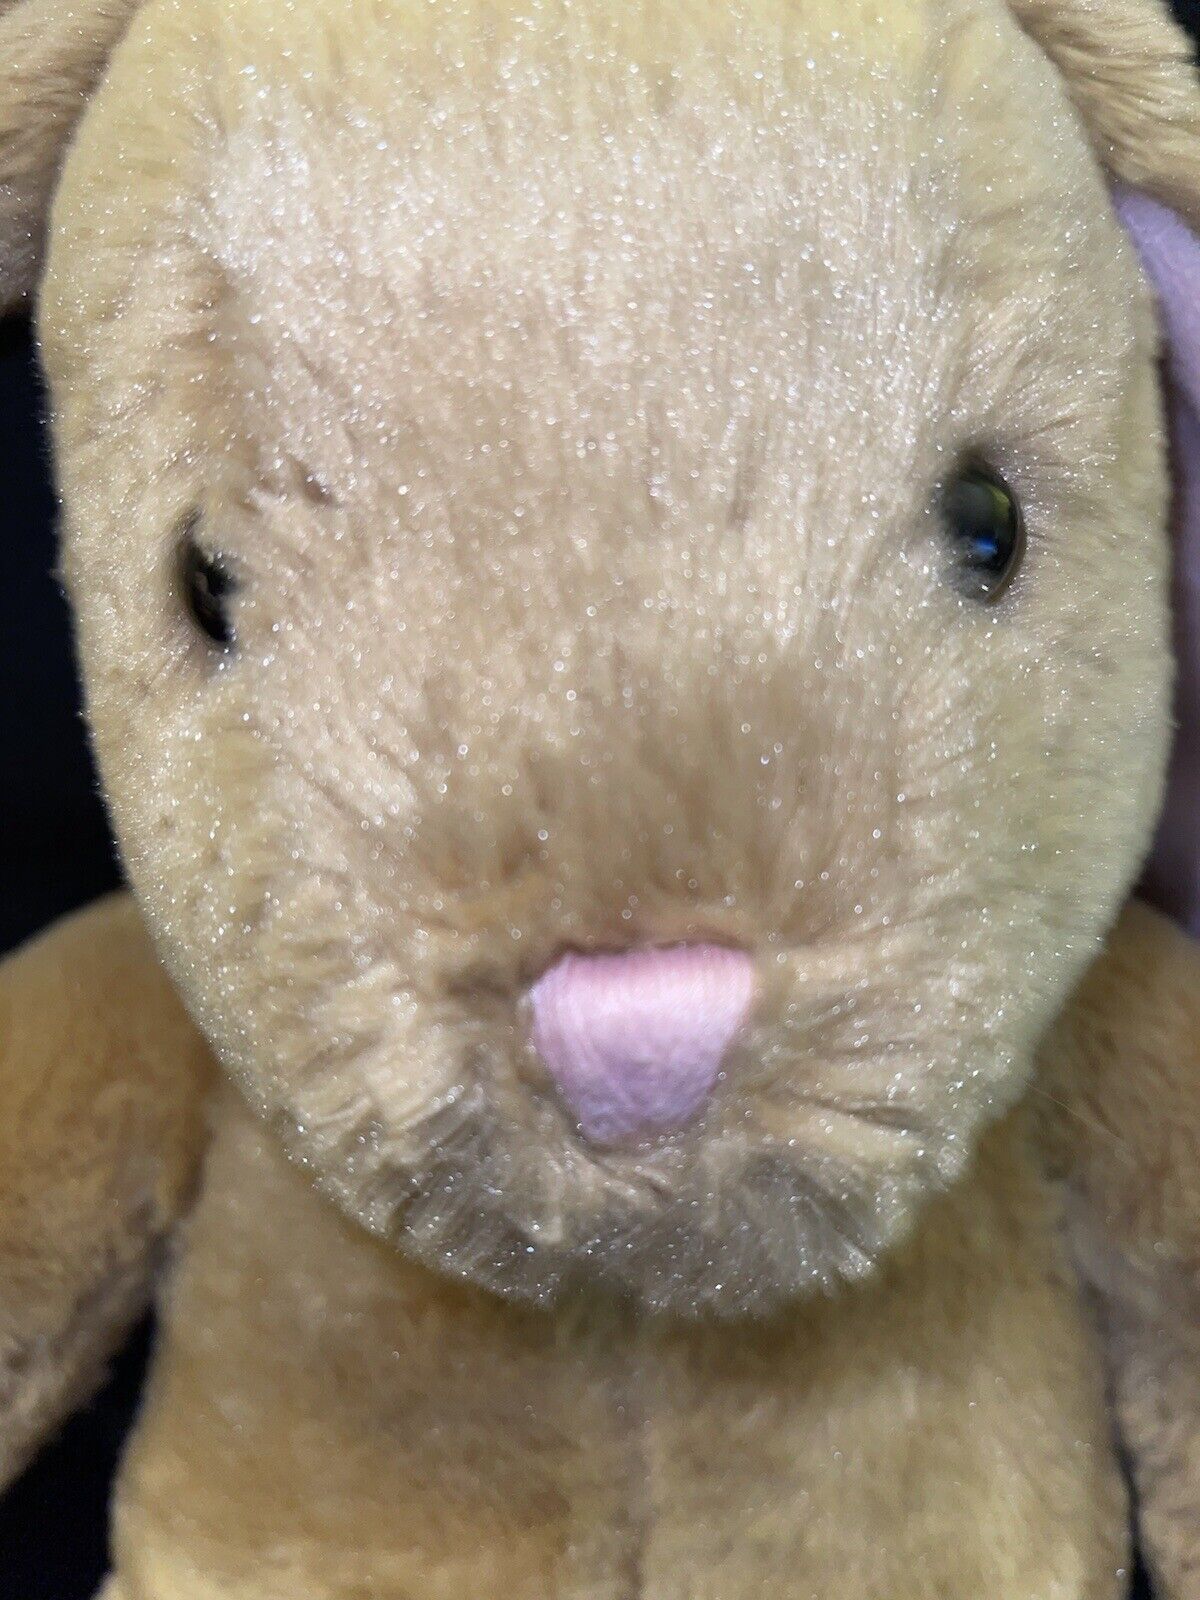 Lot of 3 Build-A-Bear Floppy Ear Tan Easter Bunny Rabbits Plush Stuffed Animals Build-A-Bear Workshop - фотография #6